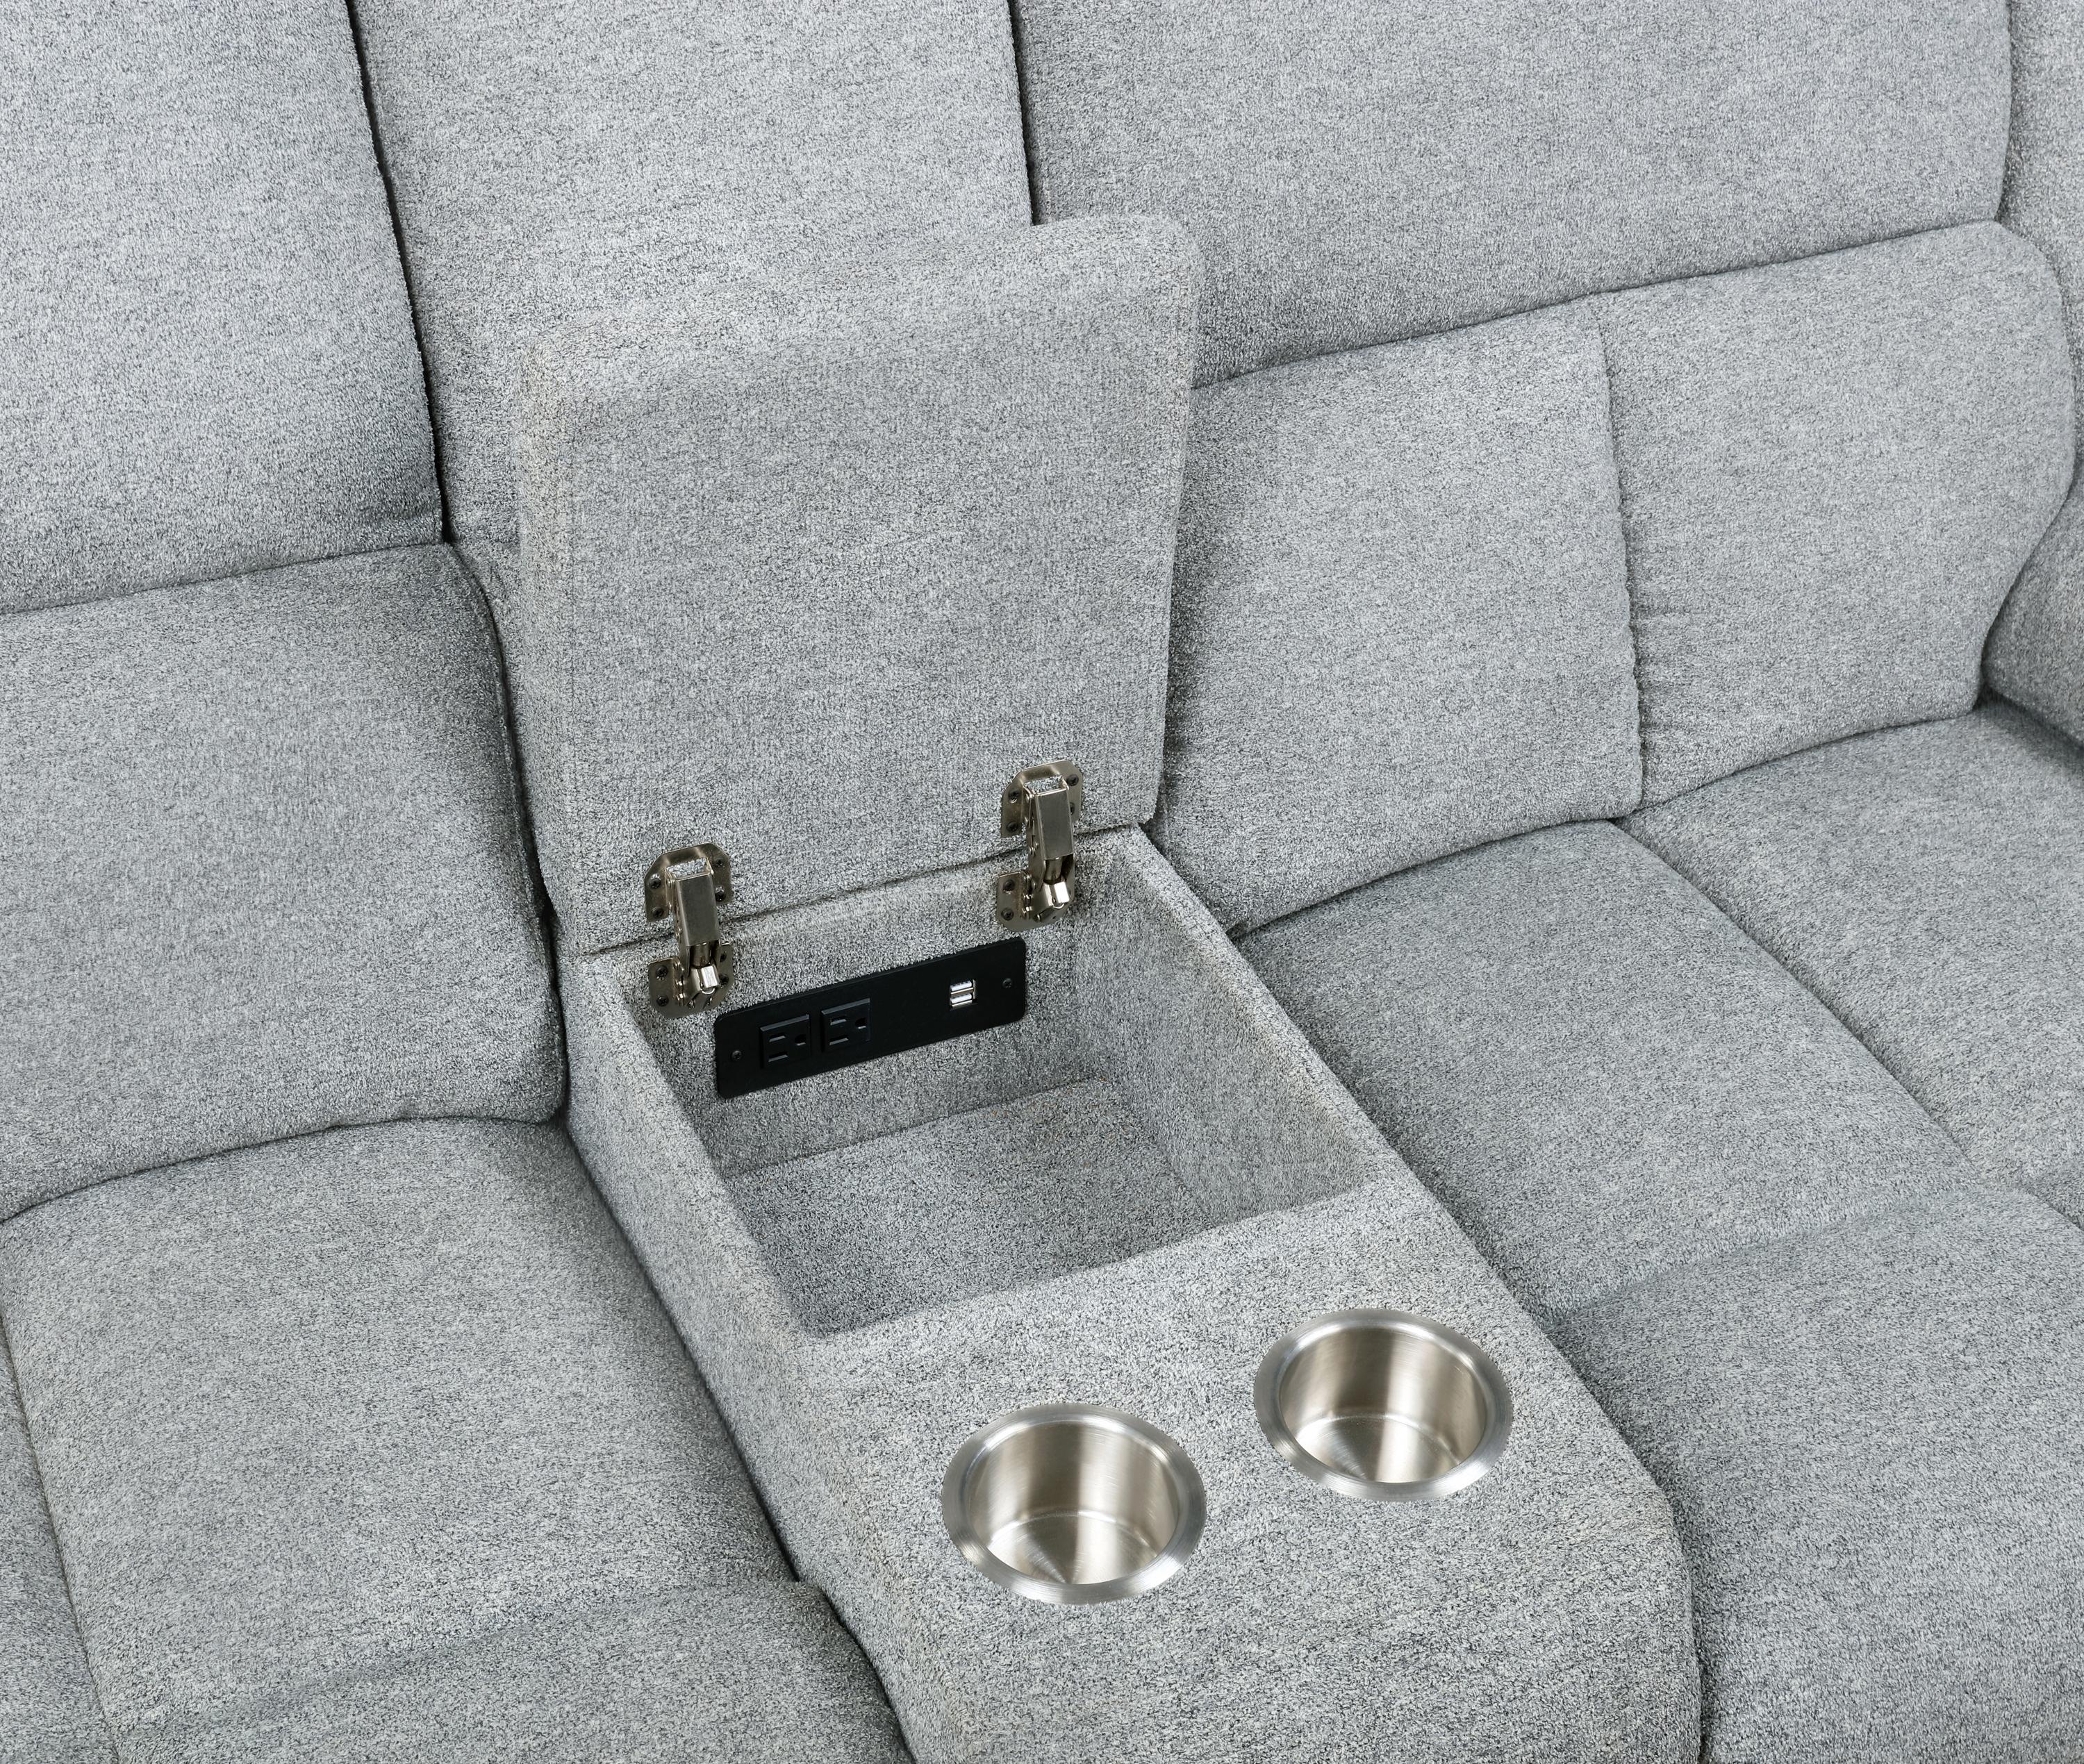 

    
Modern Gray Performance Fabric Power Sofa Set 3pcs Coaster 602561P-S3 Waterbury
